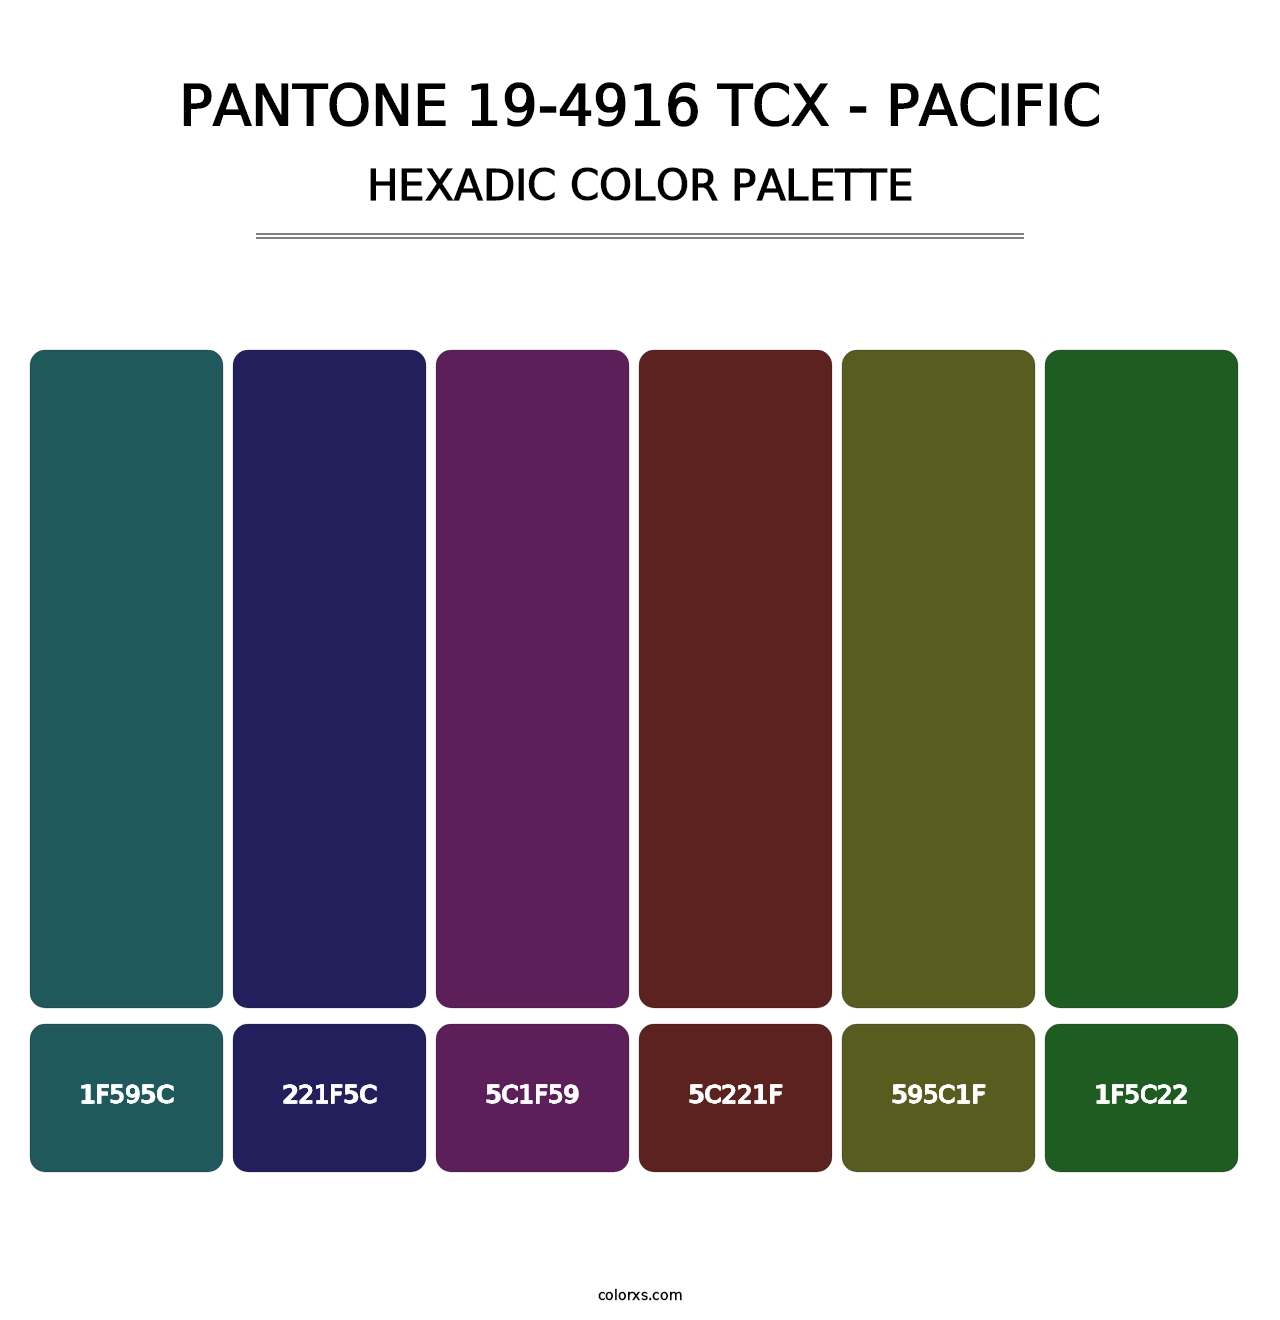 PANTONE 19-4916 TCX - Pacific - Hexadic Color Palette